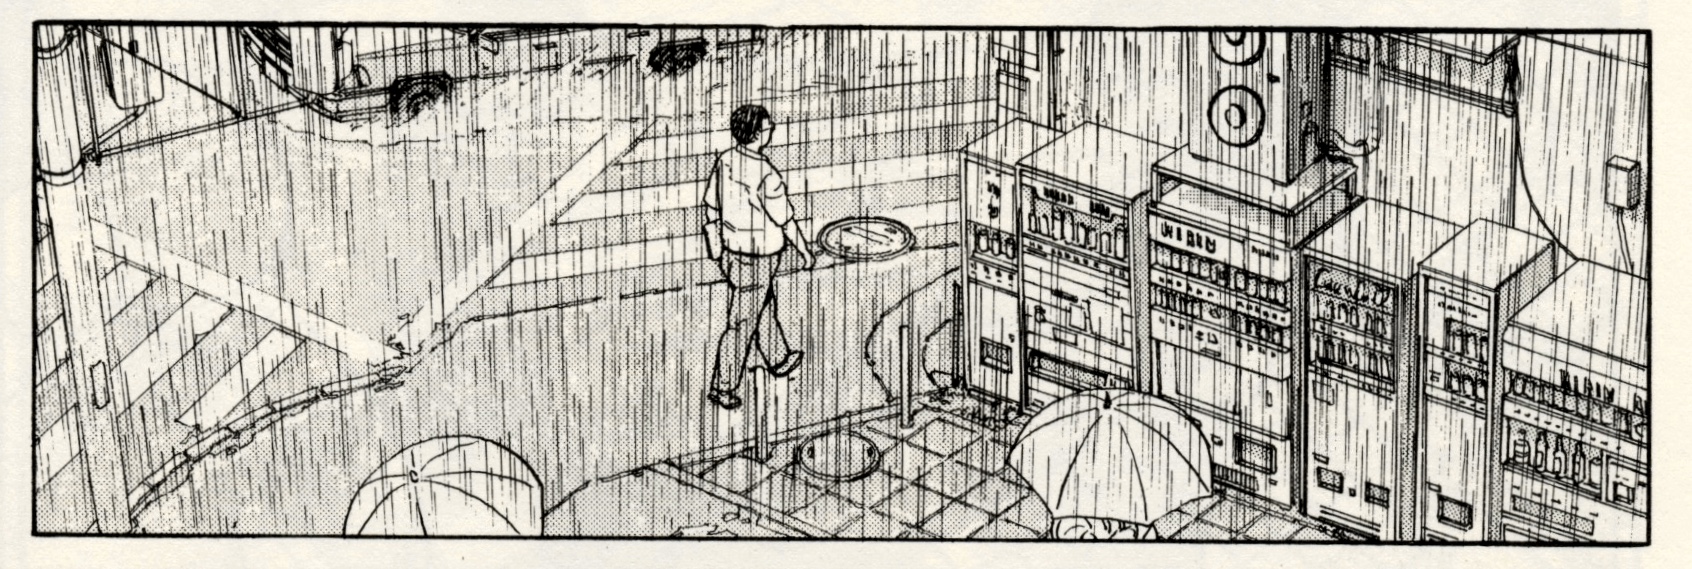 manga - p131 - panel 4